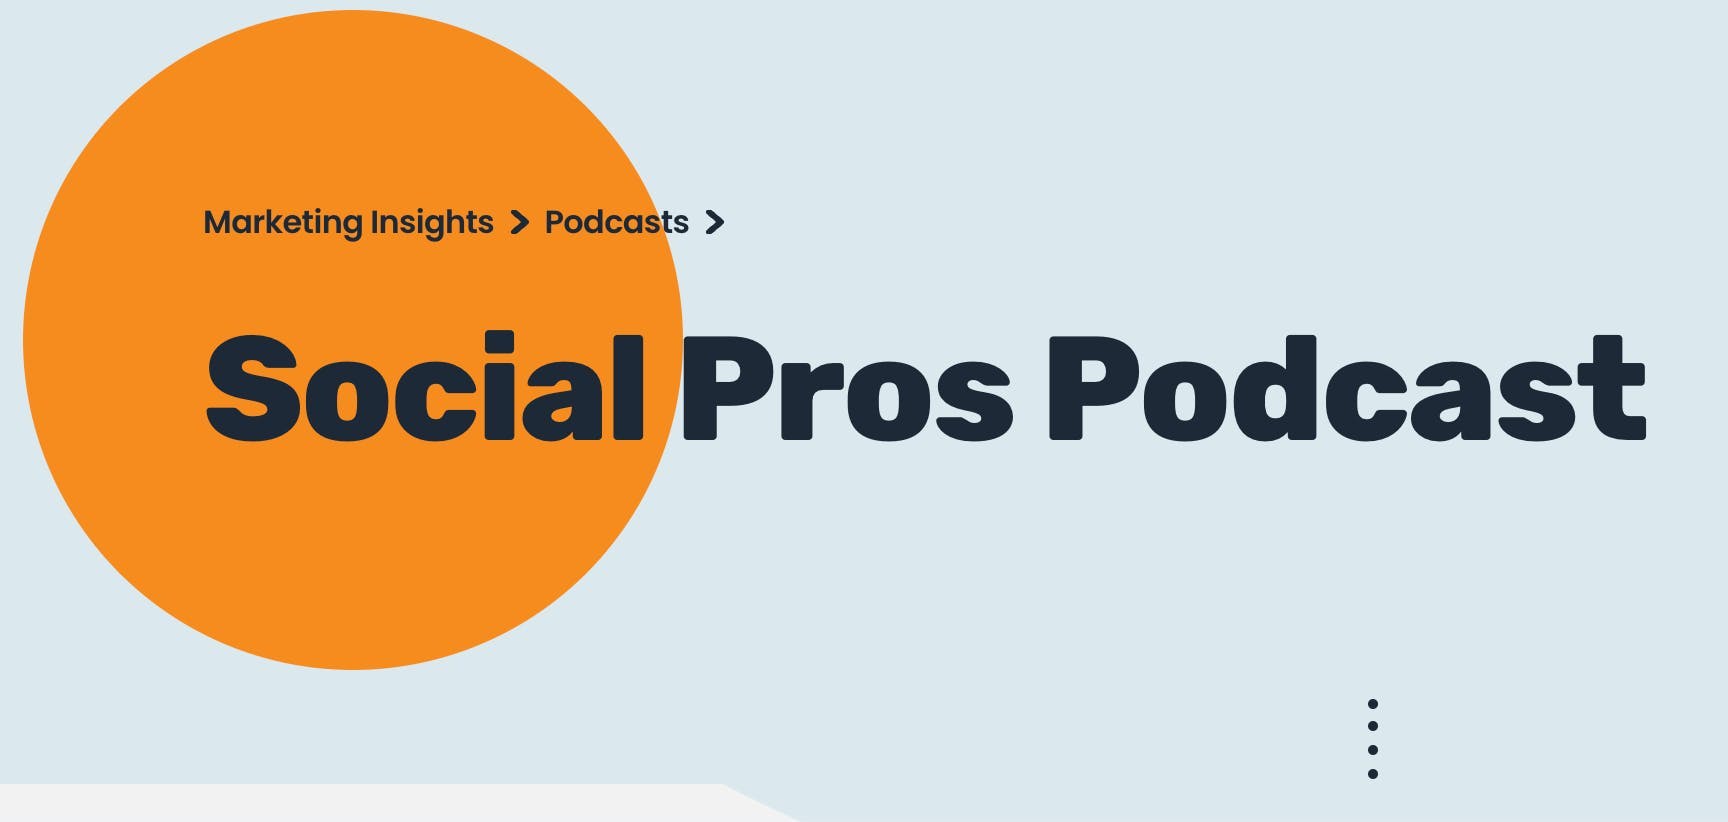 Social pros podcast